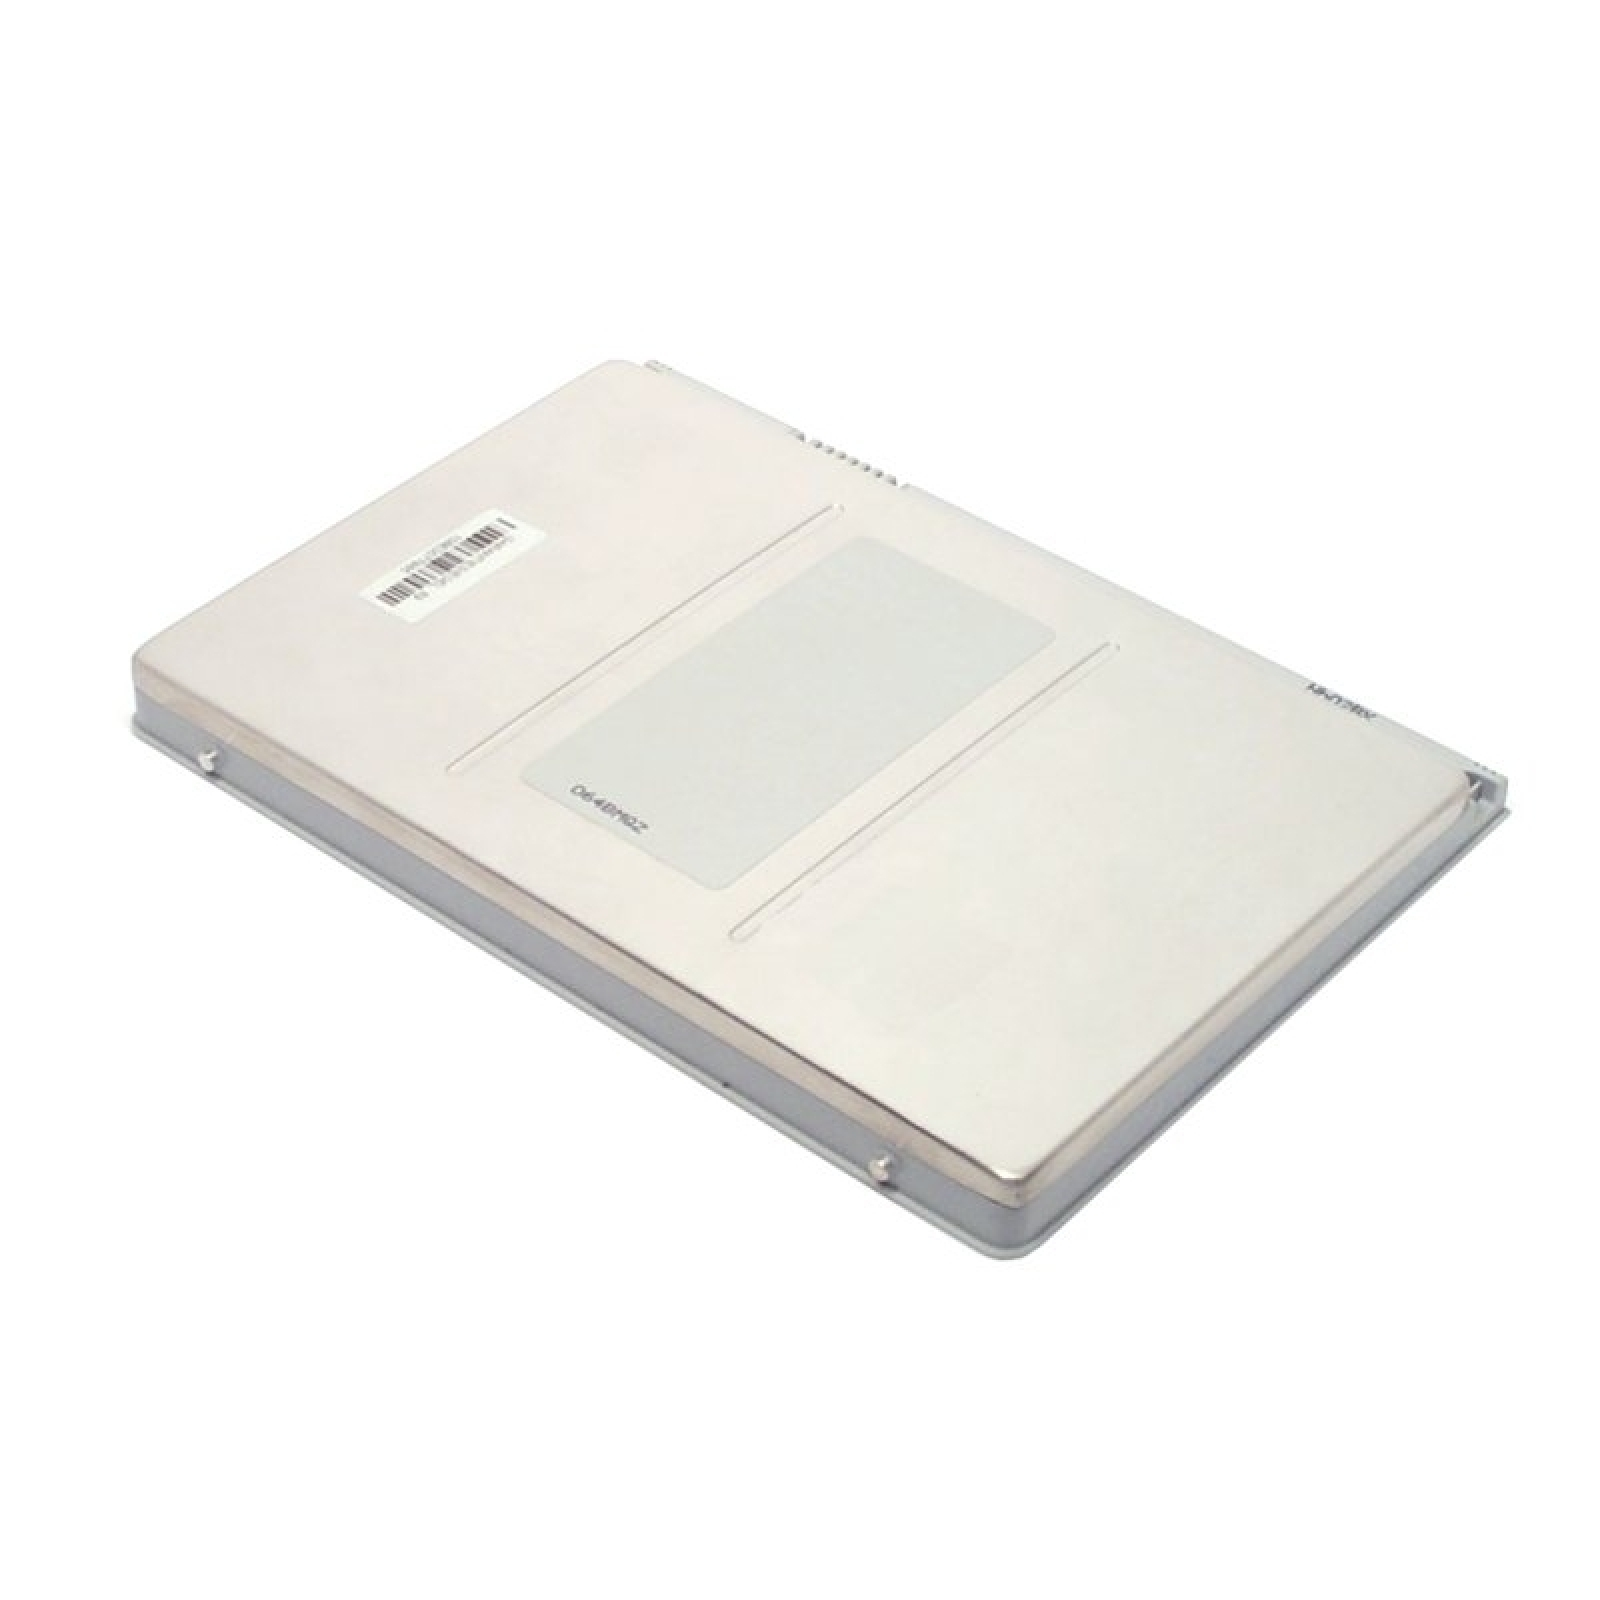 Volt, MTXTEC MA611KH/A APPLE MacBook für mAh 6600 Lithium-Polymer (LiPoly) Notebook-Akku, 17\'\' 10.8